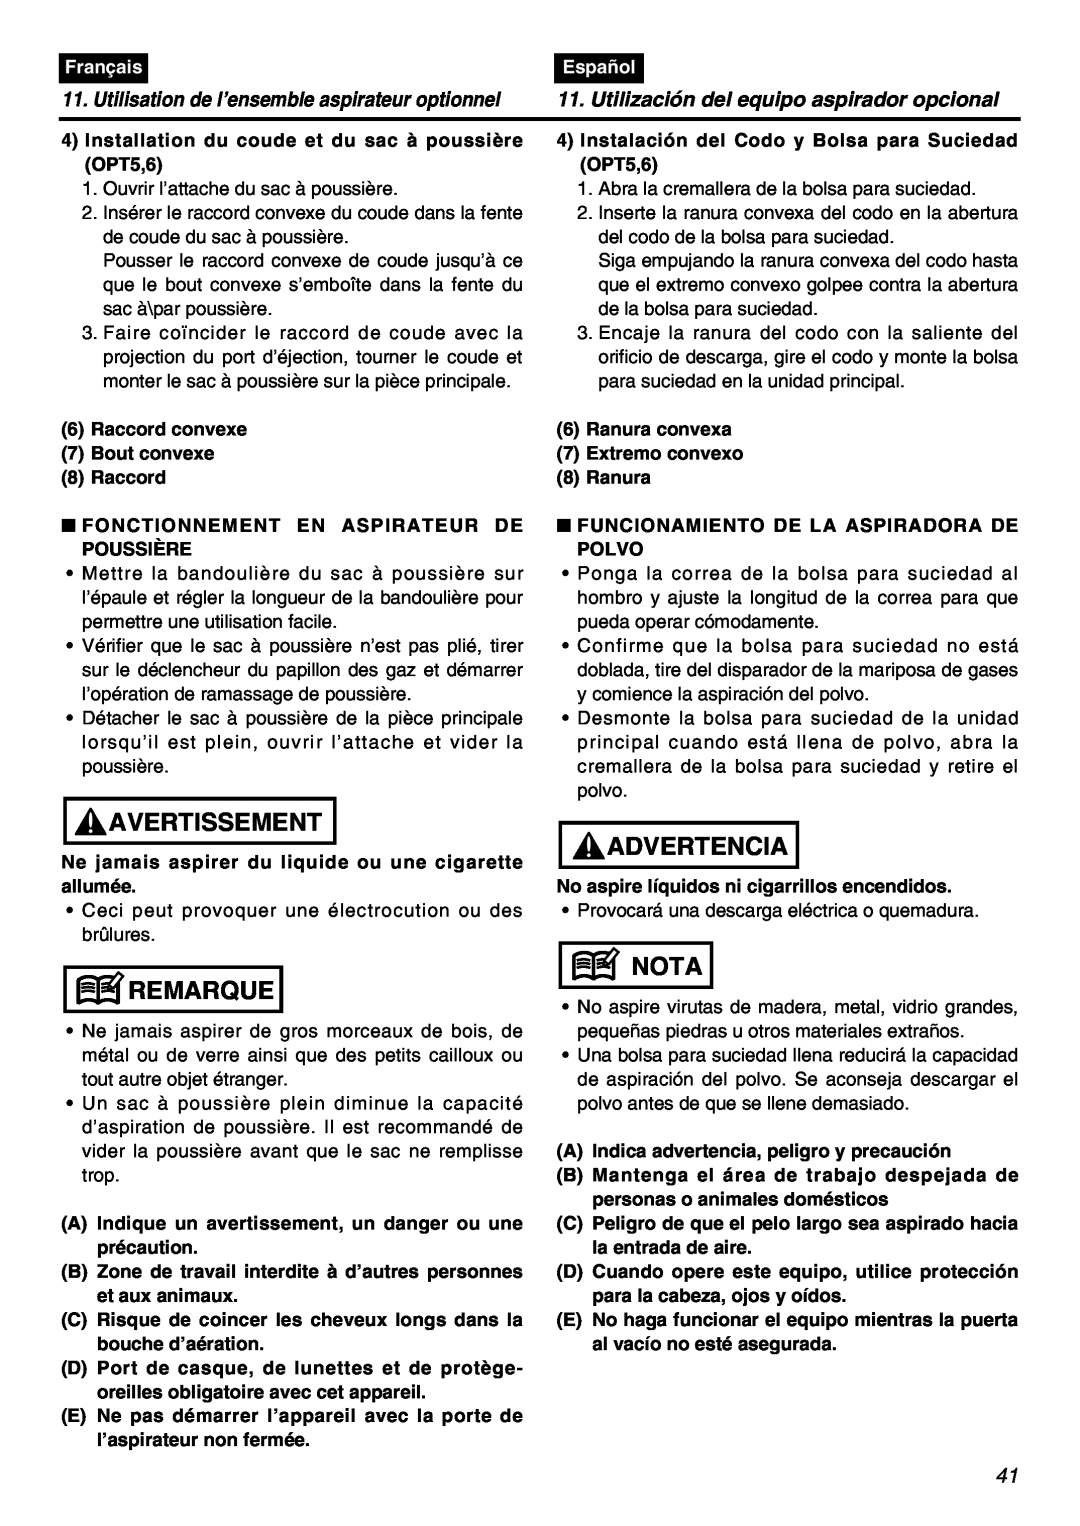 RedMax HBZ2601 Avertissement, Remarque, Advertencia, Nota, Utilización del equipo aspirador opcional, Français, Español 